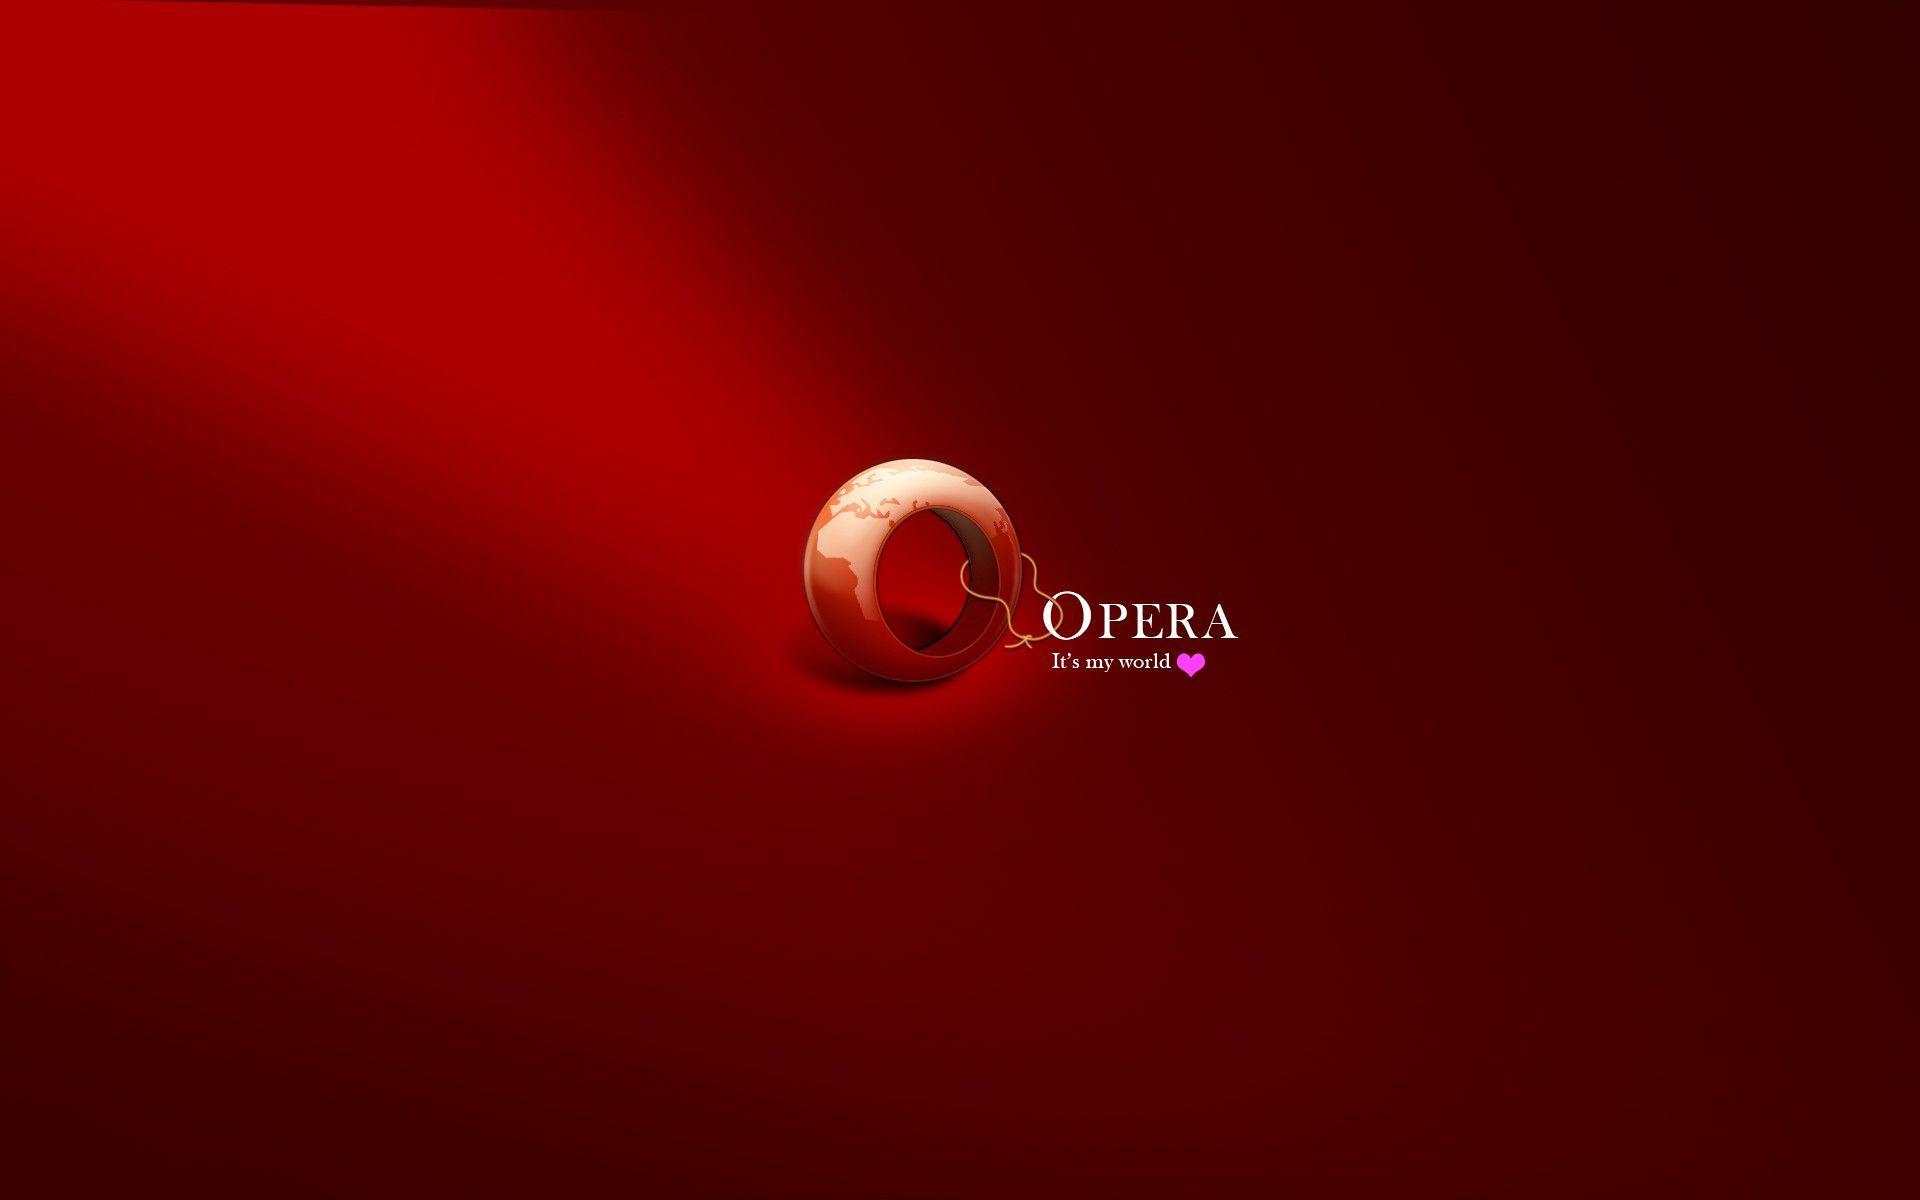 Opera GX  Gaming Browser  Opera